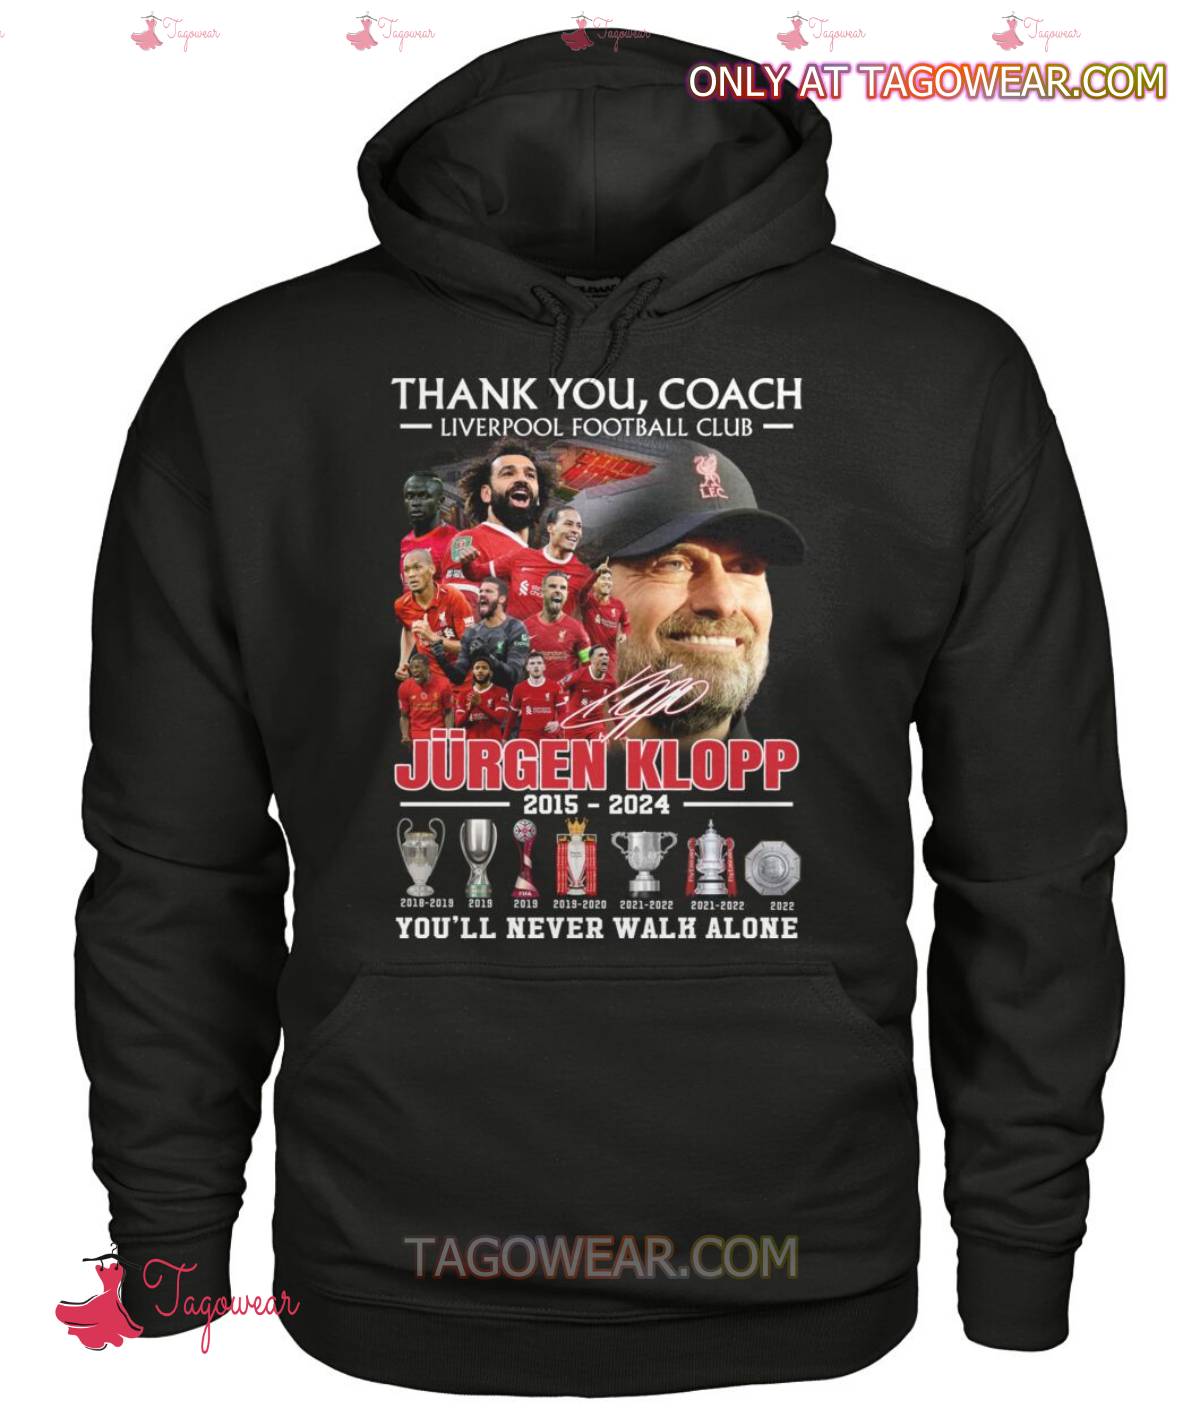 Thank You Coach Liverpool Football Club Jurgen Klopp 2015-2024 You'll Never Walk Alone Shirt c